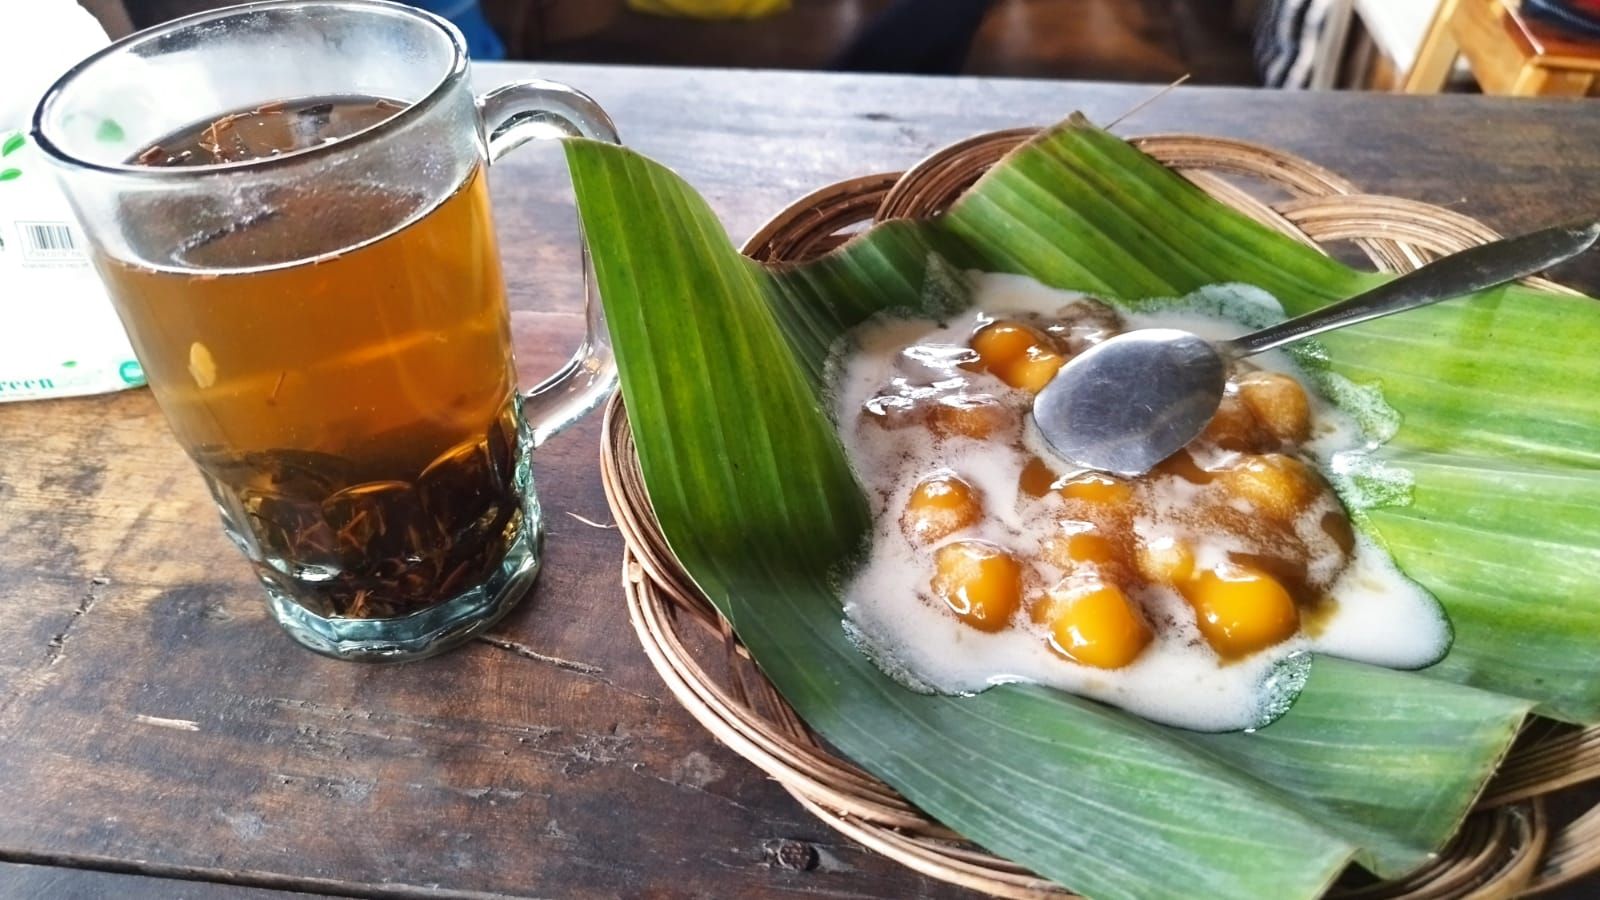 Menu Spesial Ngabuburit di Rest Area Giri Lori d'kuwondogiri, Desa Blambangan, Banjarnegara